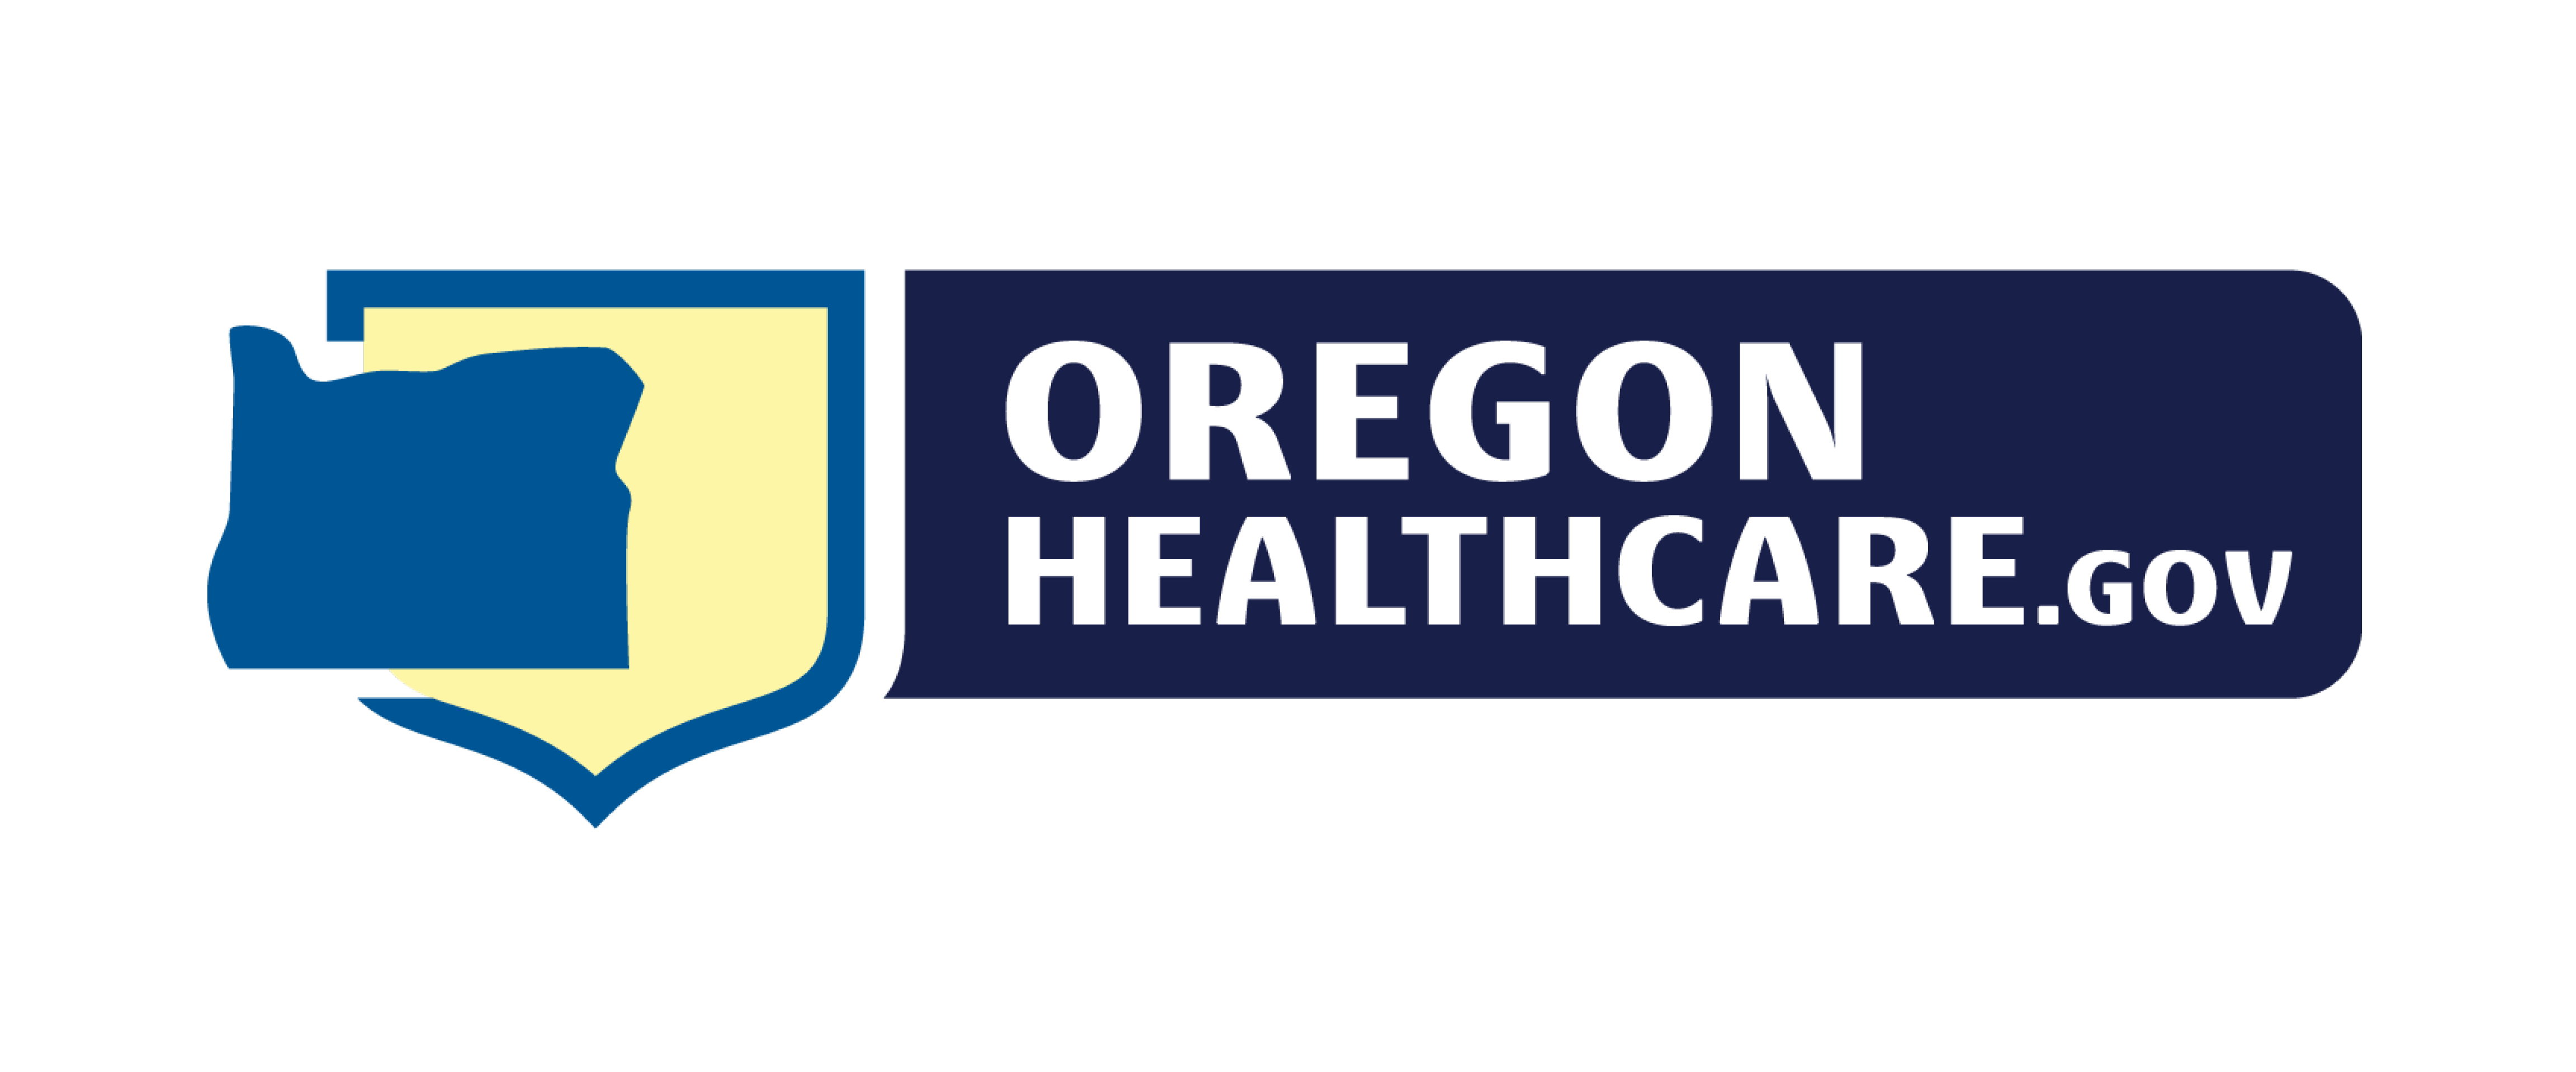 Oregon Healthcare logo